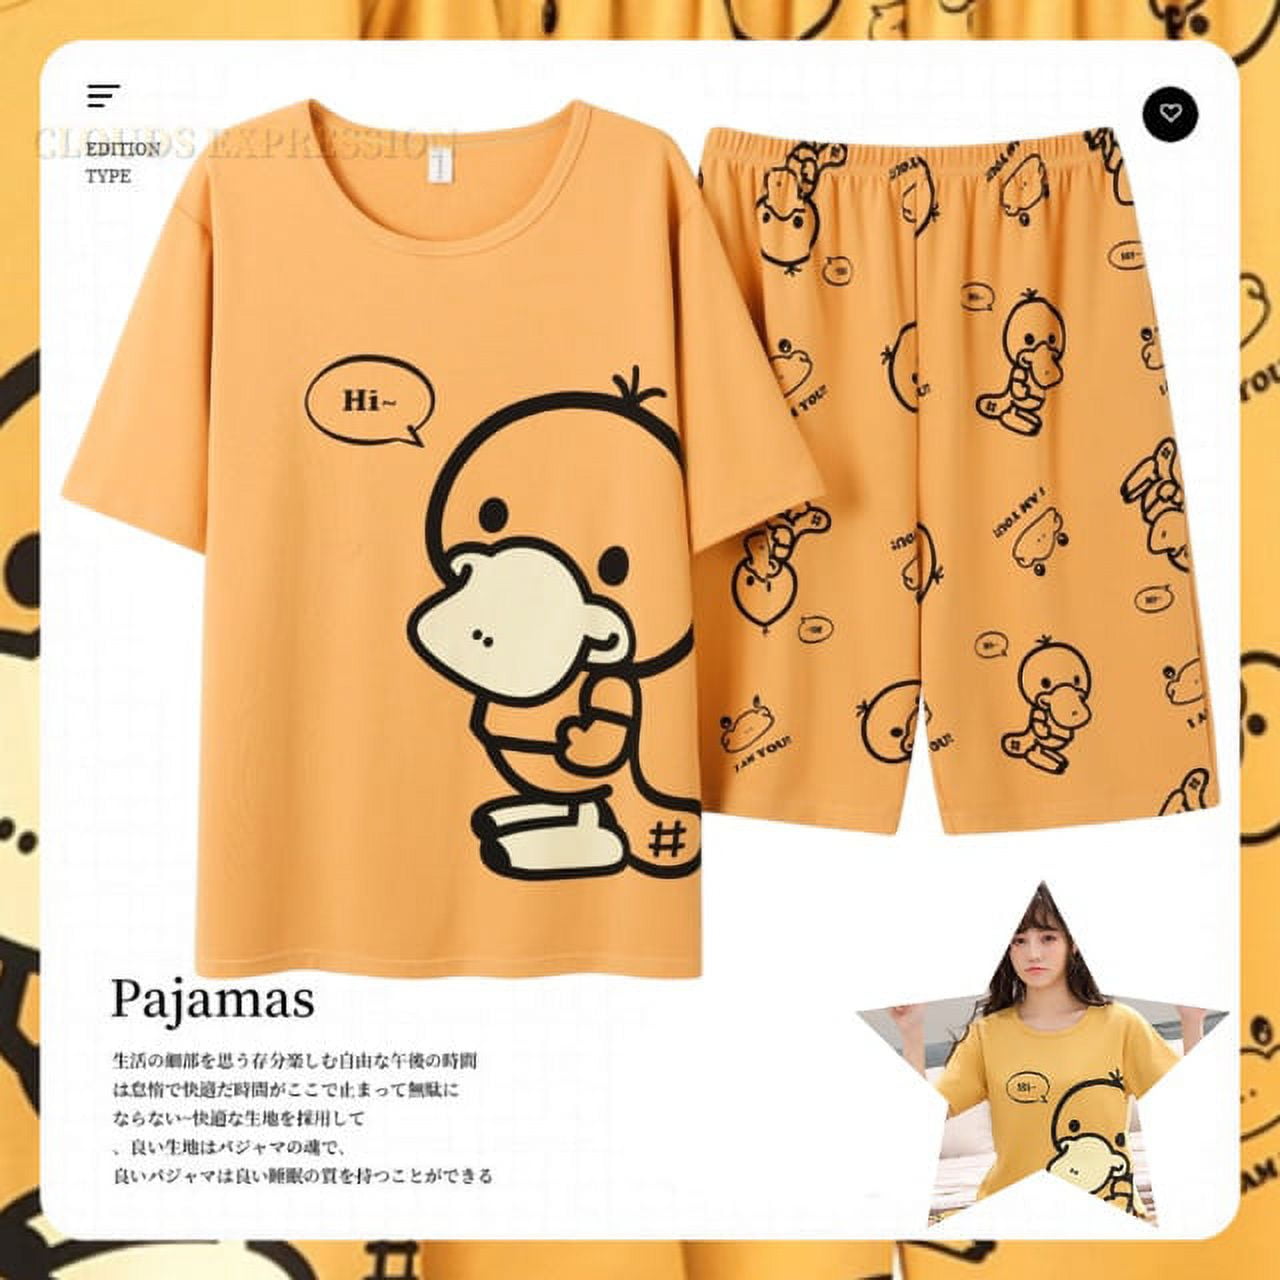 QWZNDZGR Summer Two Piece Sleepwear Cartoon Duck Printting Short-sleeved  Men's Pjamas Sets Long Pants Sleep Loungewear Pijamas Homewear 